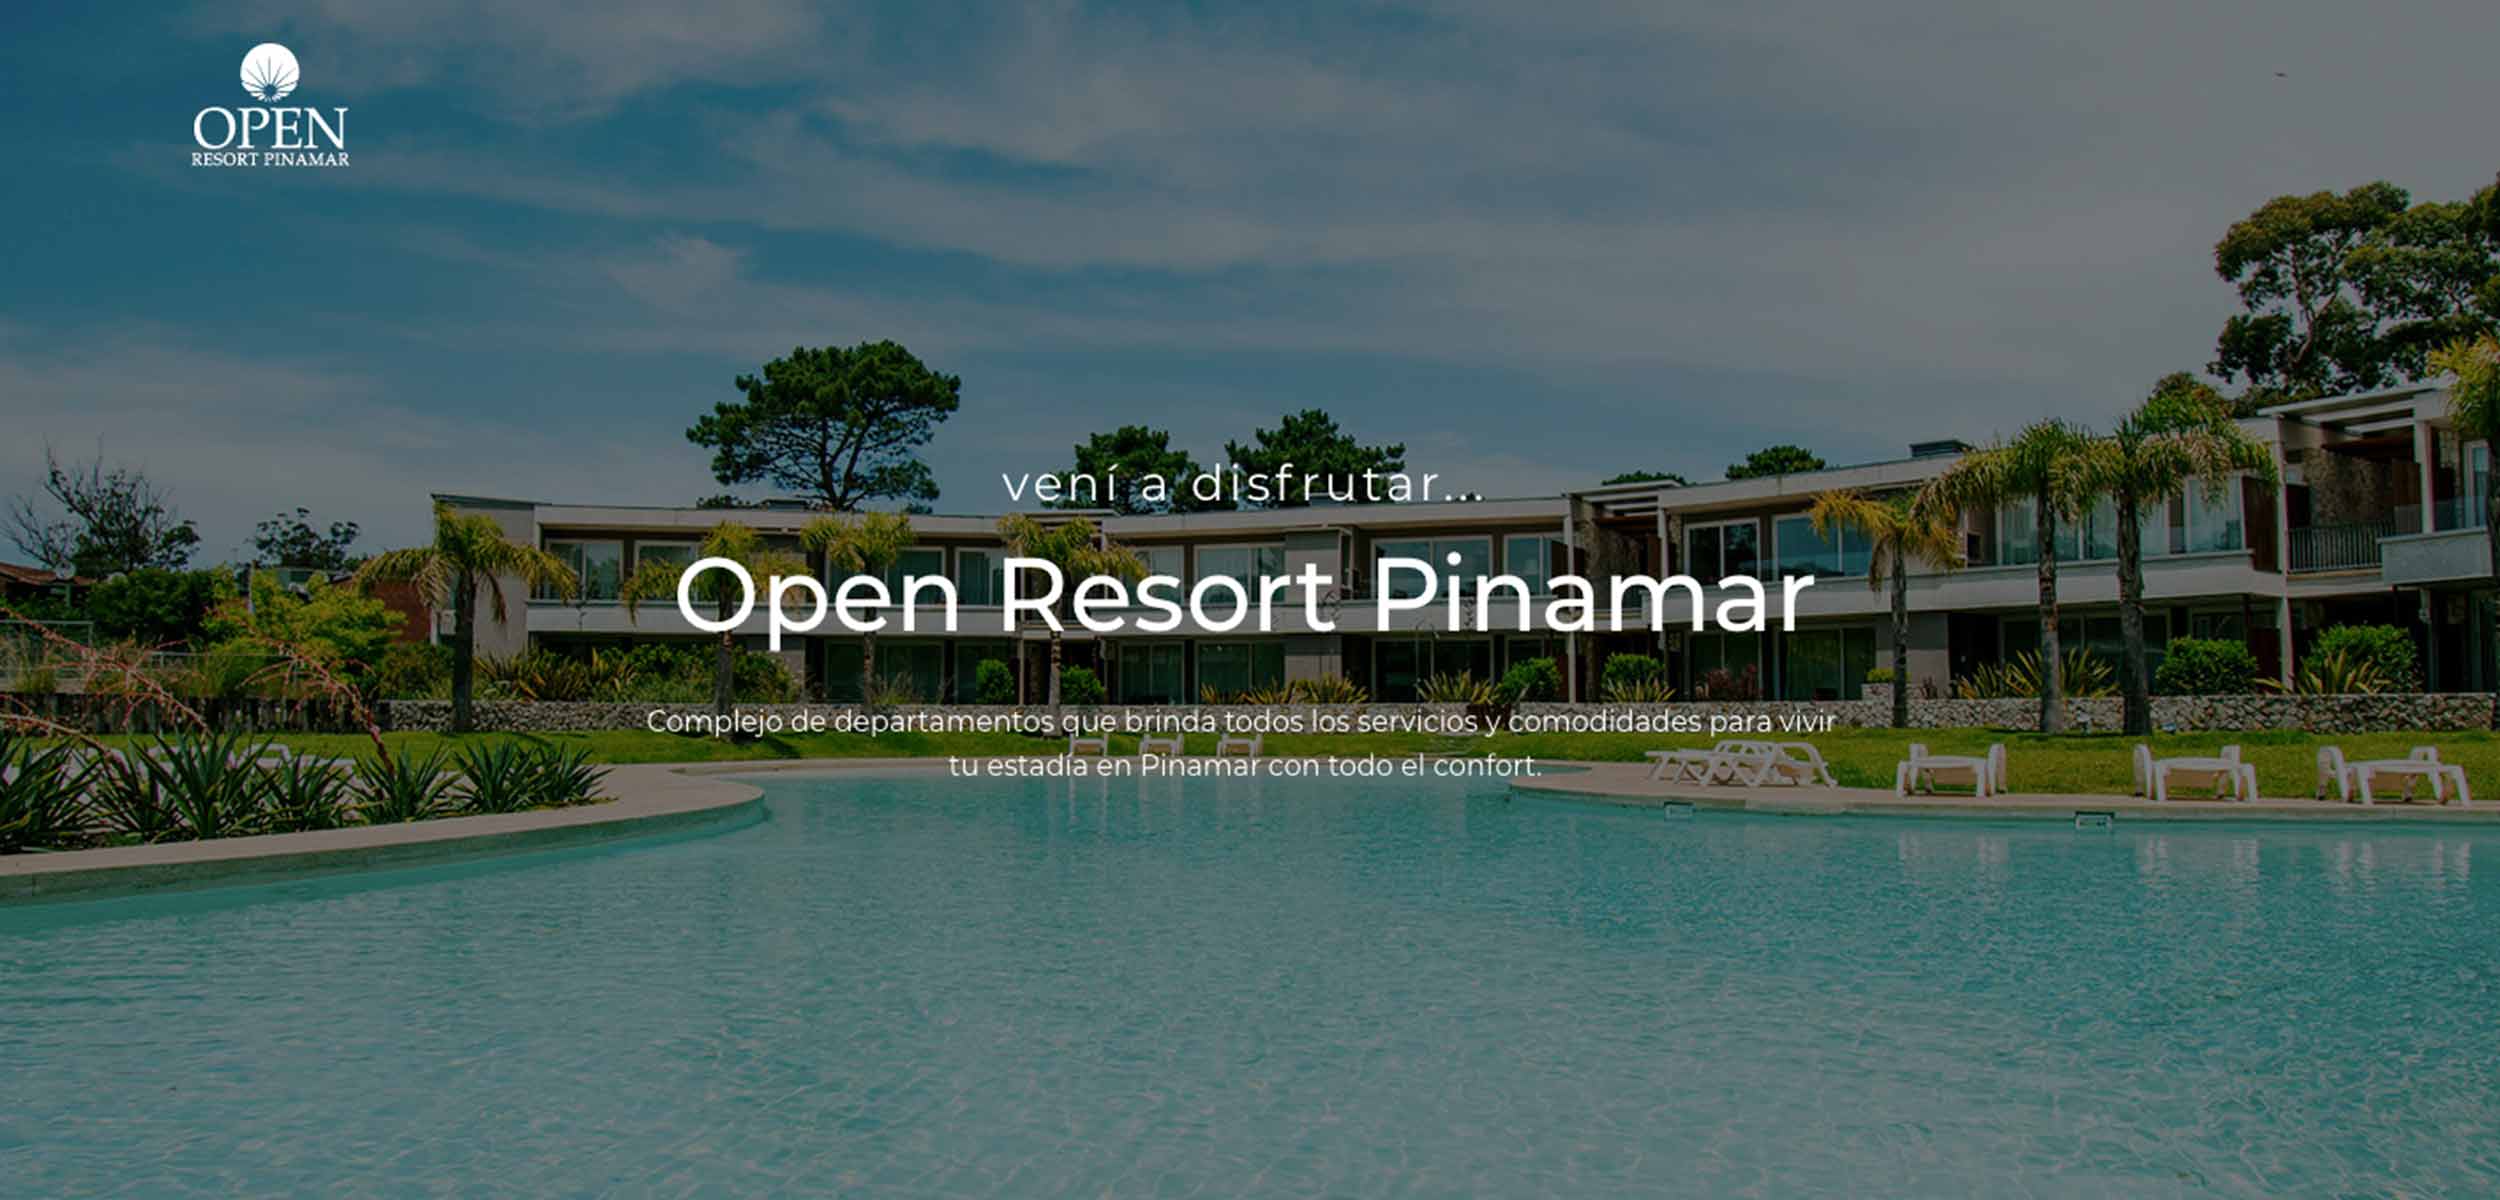 Open Resort Pinamar